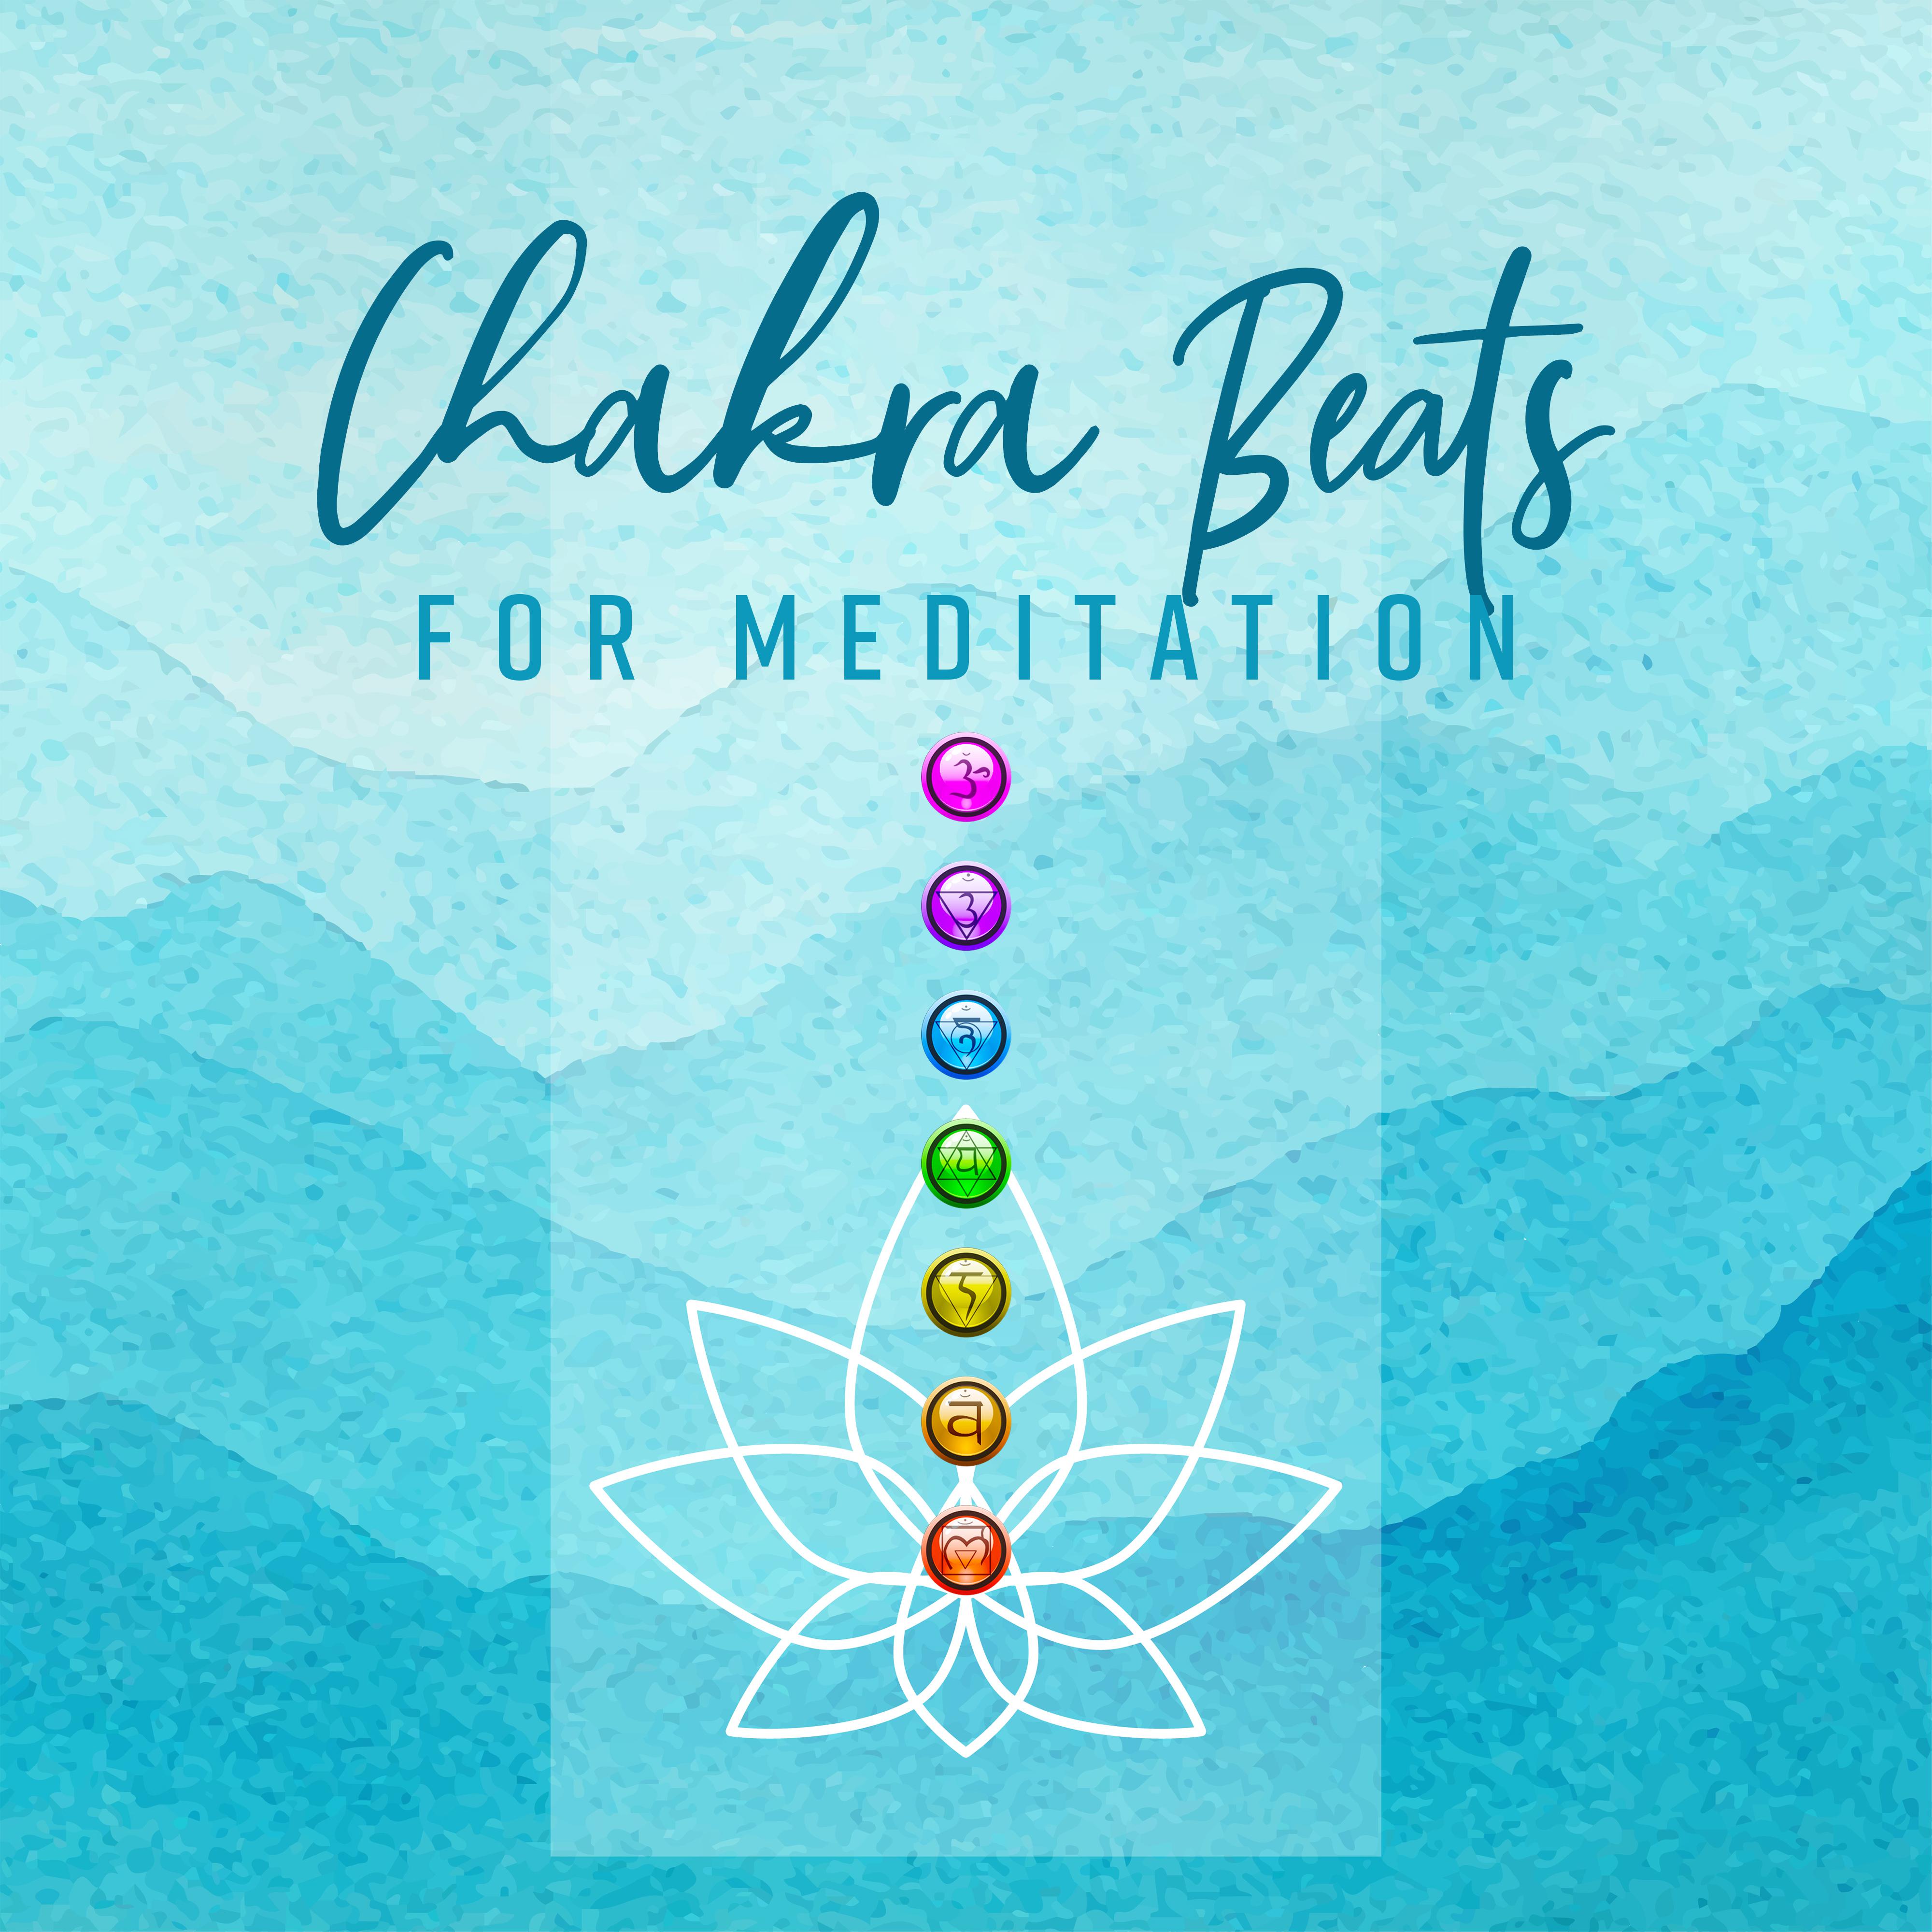 Chakra Beats for Meditation  Yoga Training, Healing Music, Chakra Suite, Inner Balance, Yoga Meditation, Stress Relief, Zen Serenity